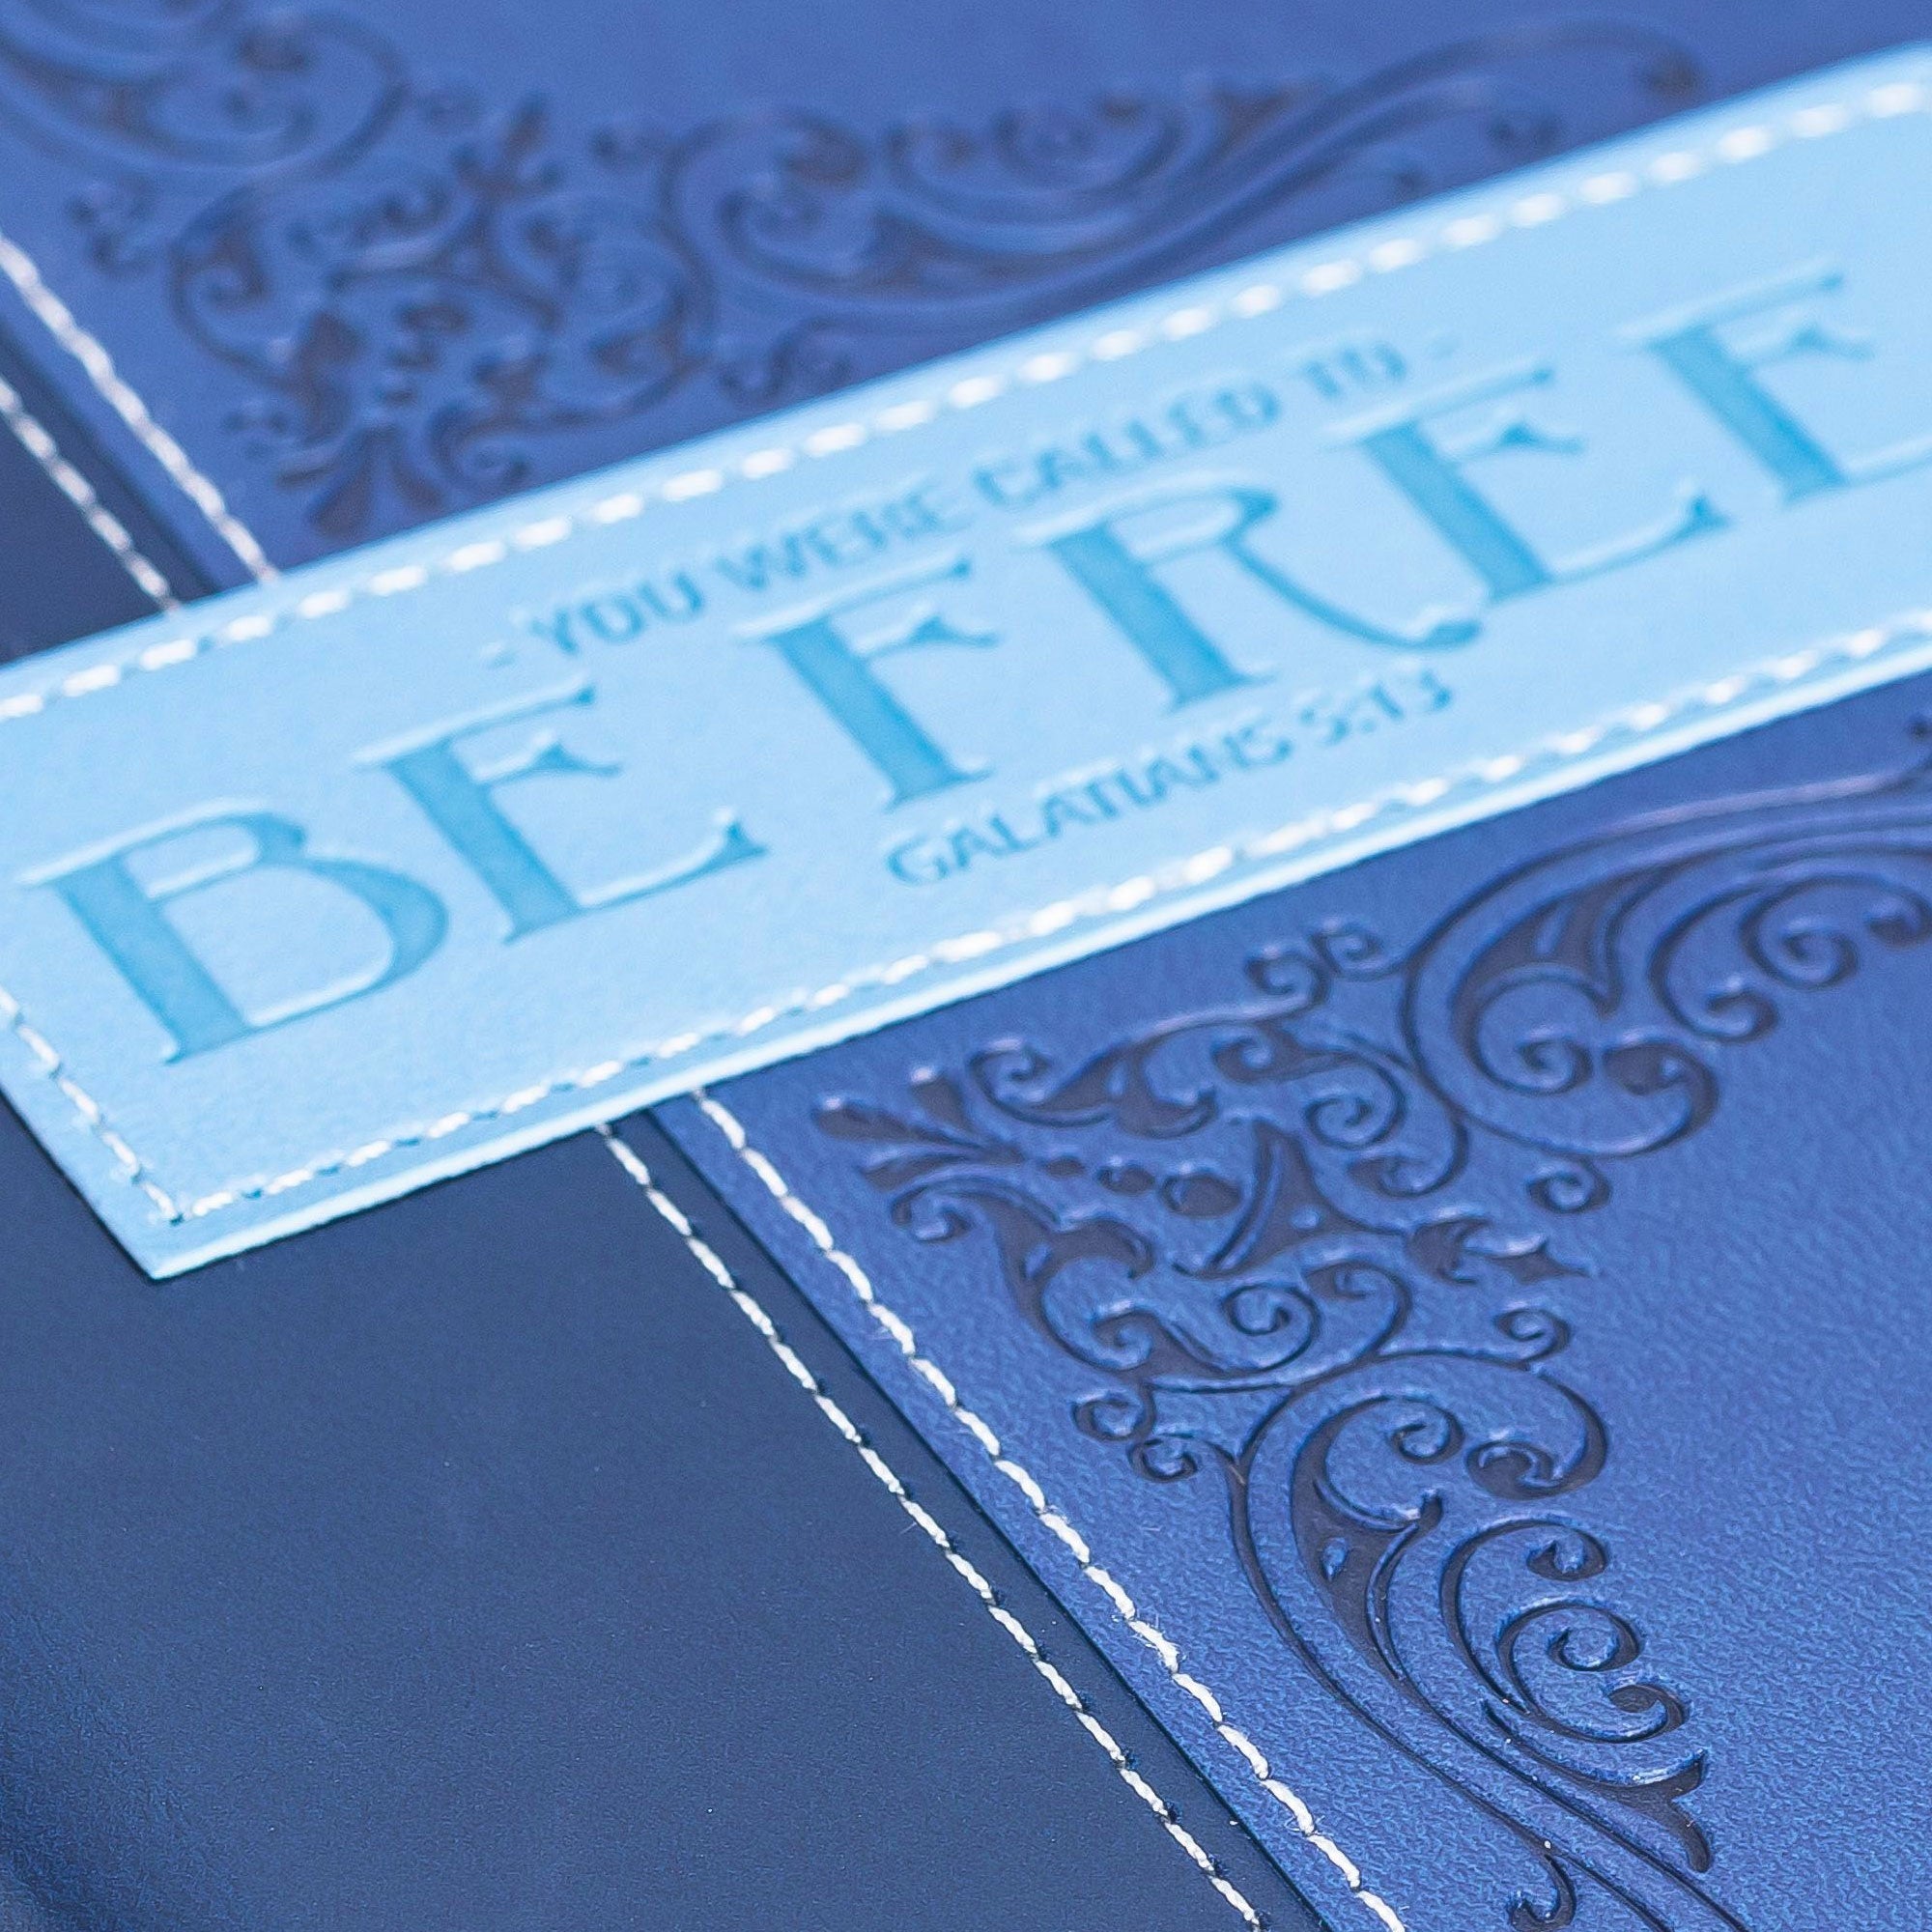 Divine Details: Zippered Journal: Blue Be Free